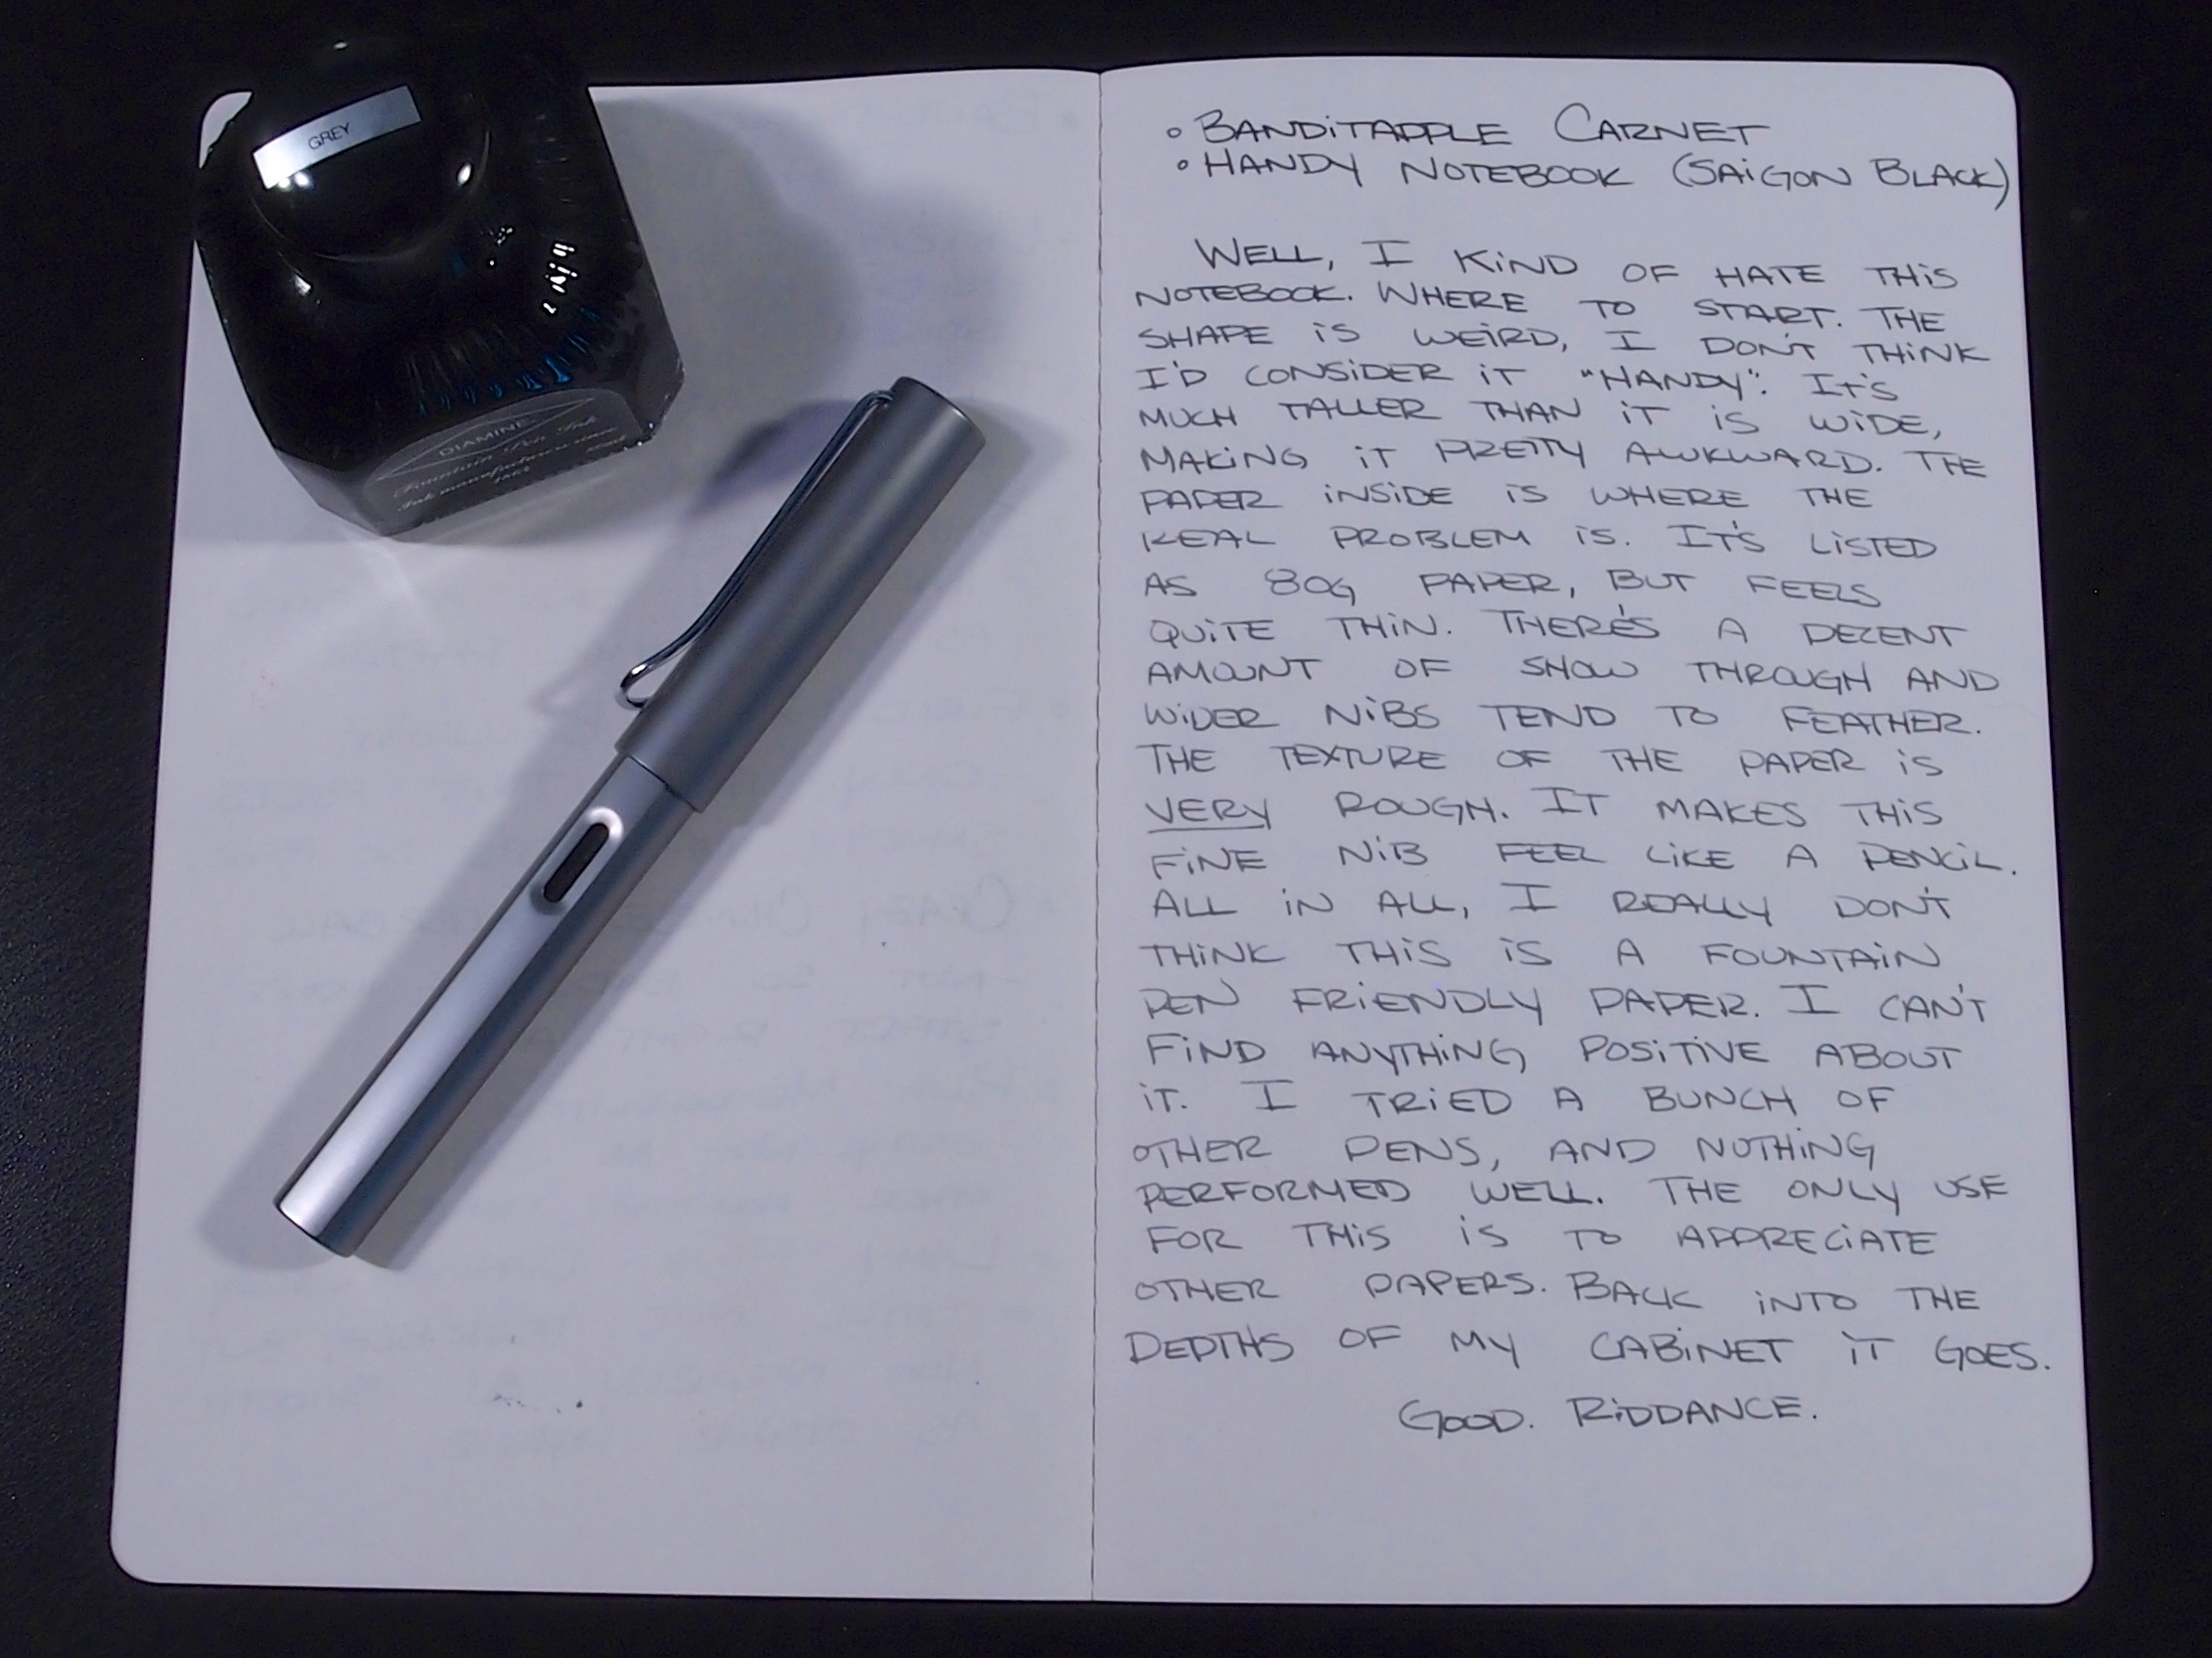 Banditapple Carnet Handy Notebook – Handwritten Stationery Review